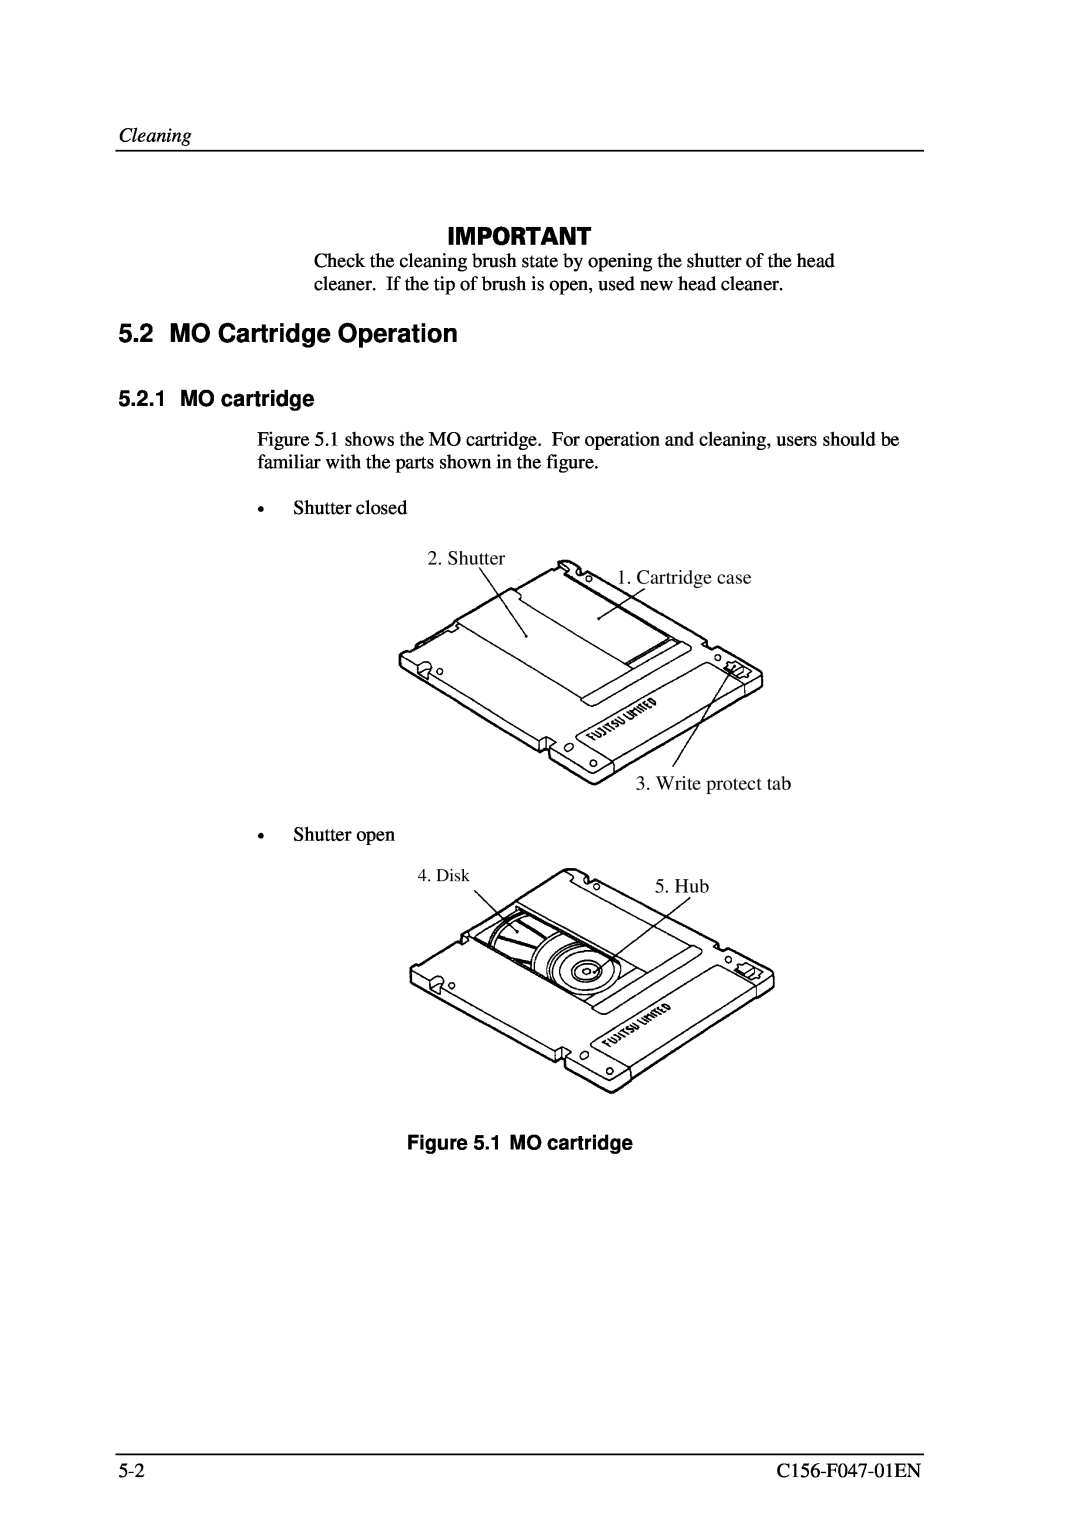 Fujitsu MDG3230UB manual MO Cartridge Operation, Cleaning, 1 MO cartridge 